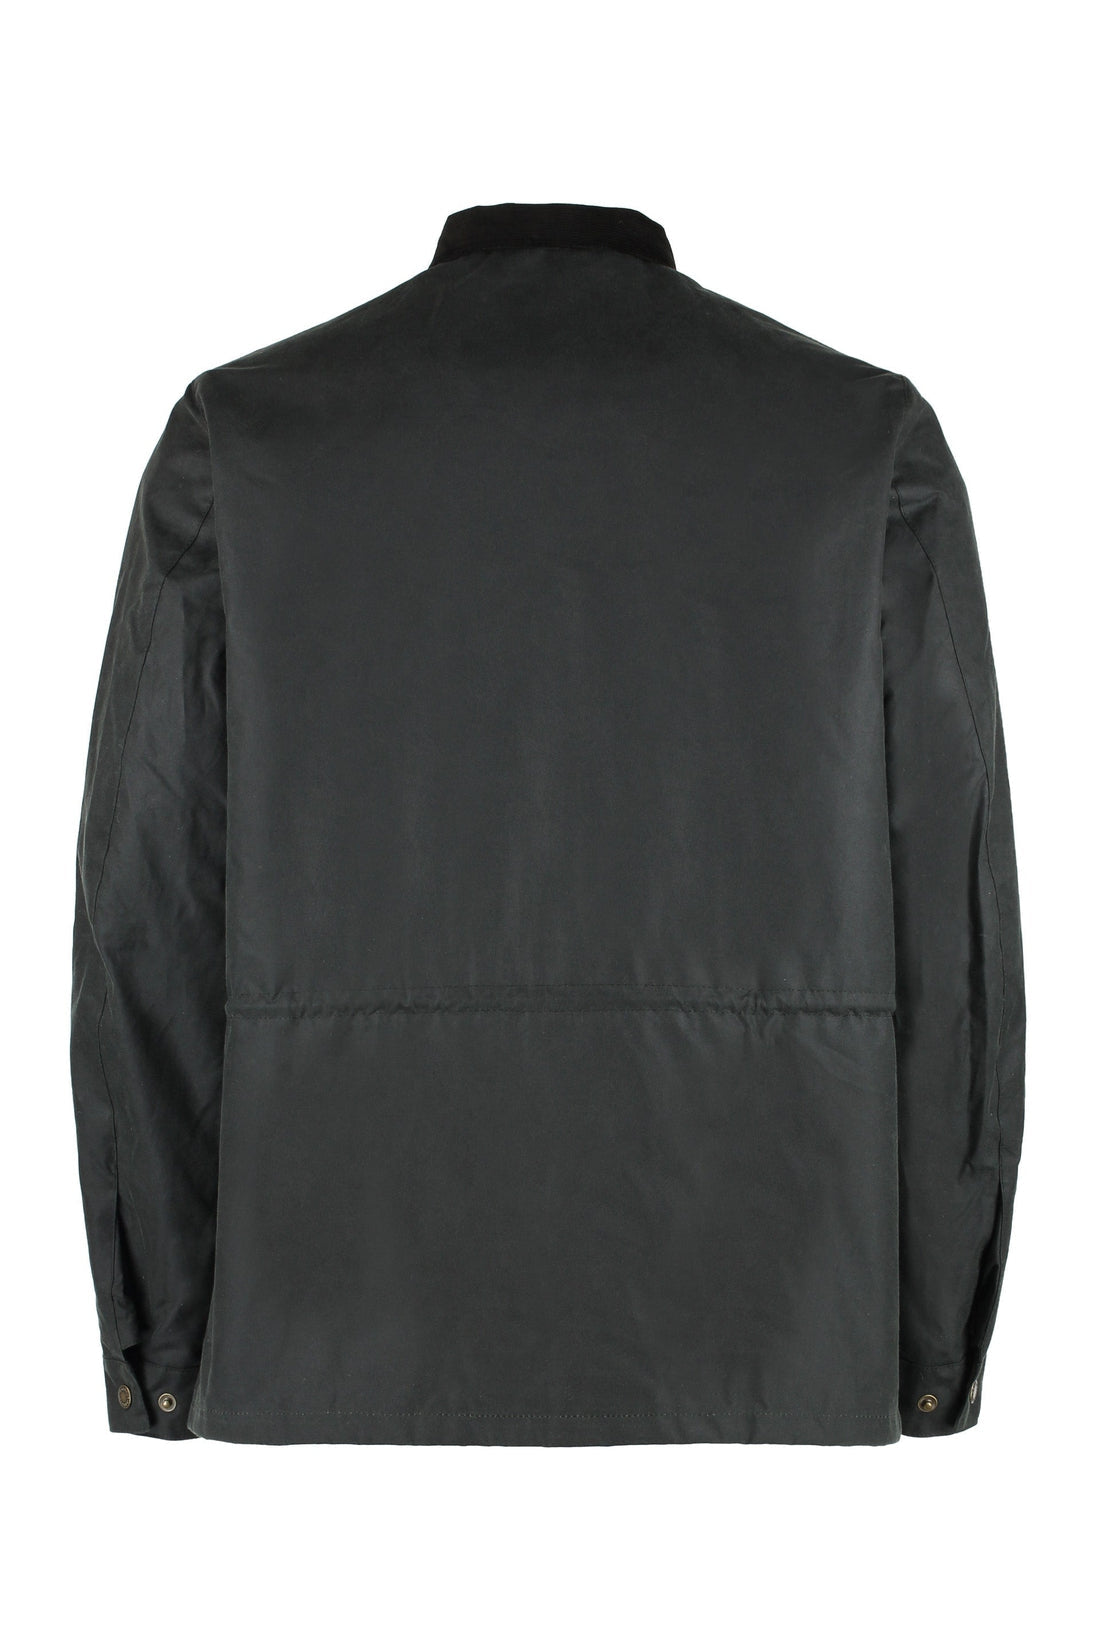 Barbour-OUTLET-SALE-Farnham jacket in waxed cotton-ARCHIVIST